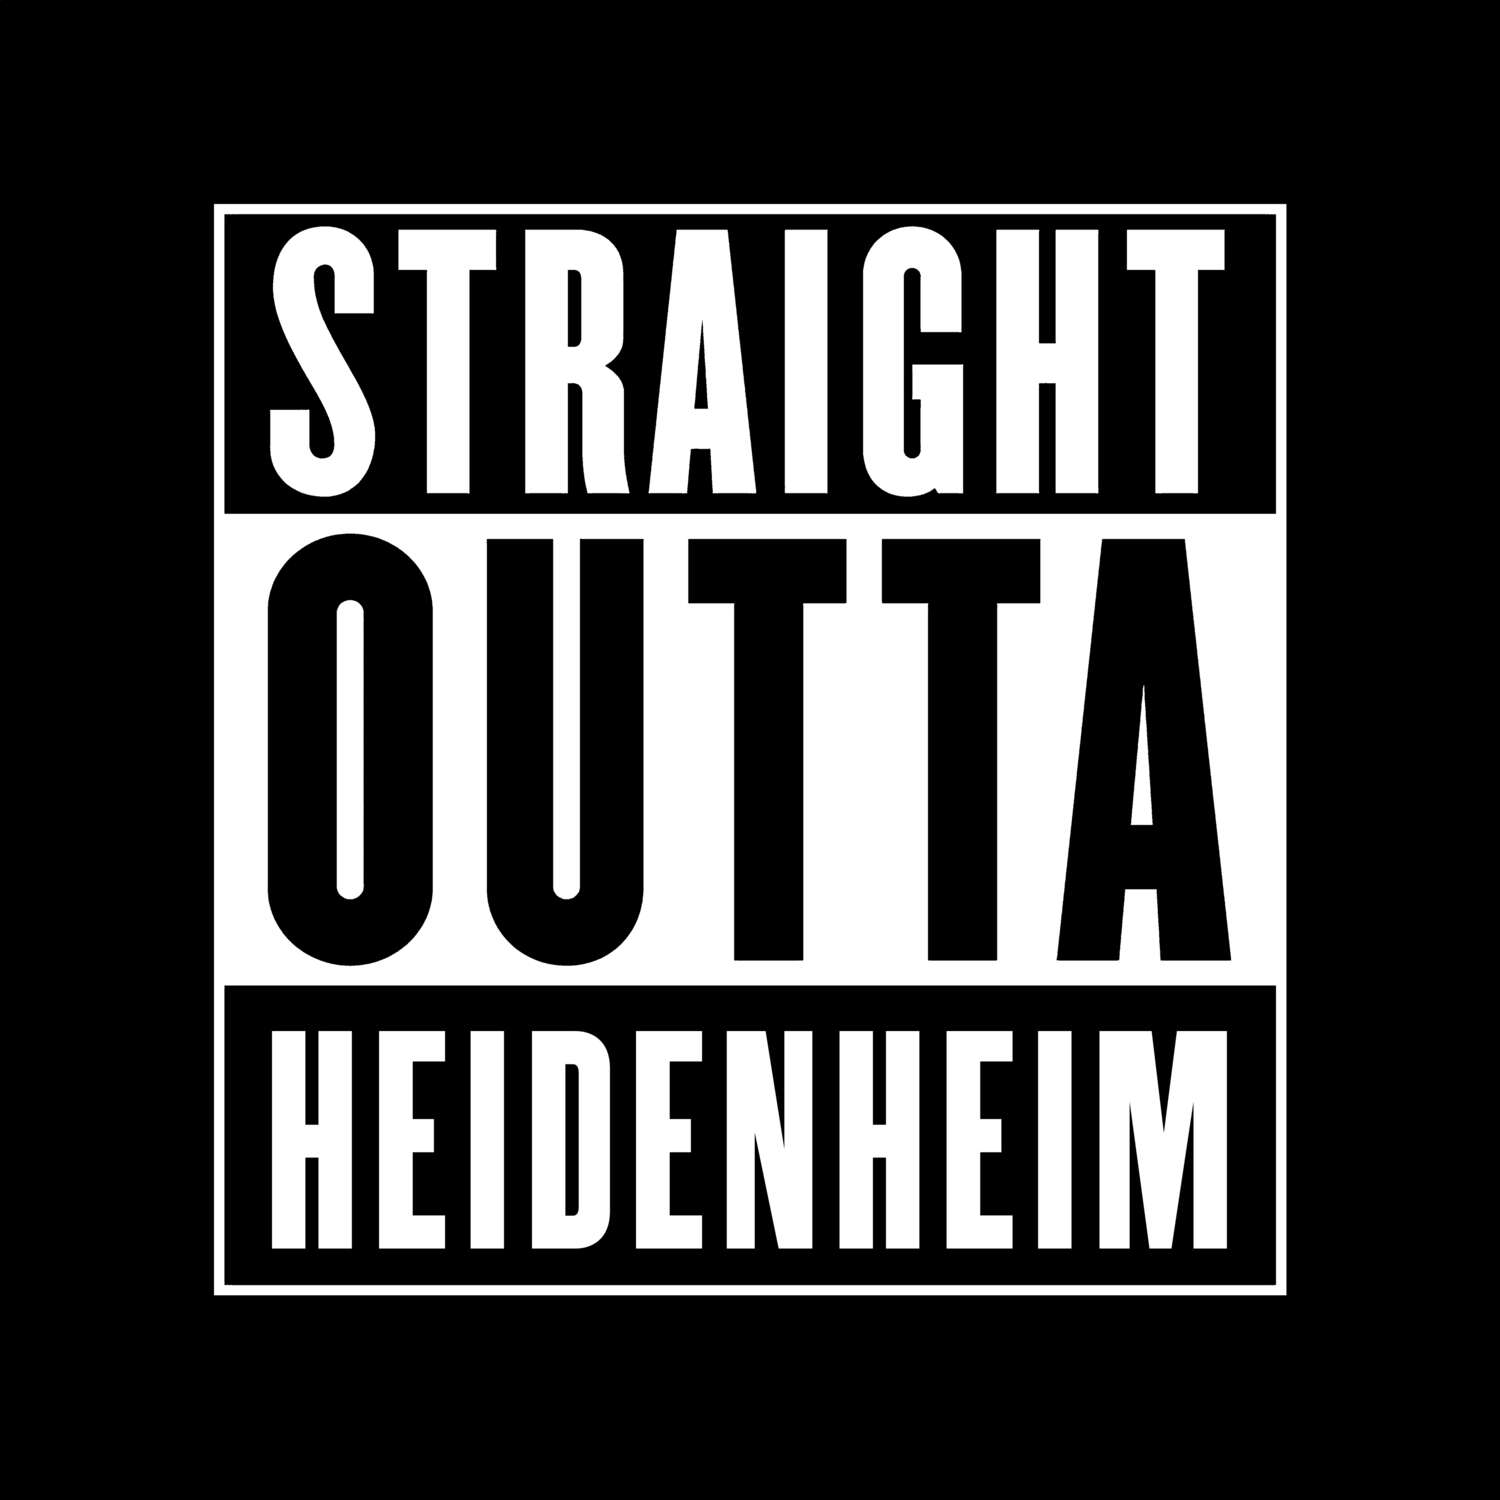 Heidenheim T-Shirt »Straight Outta«